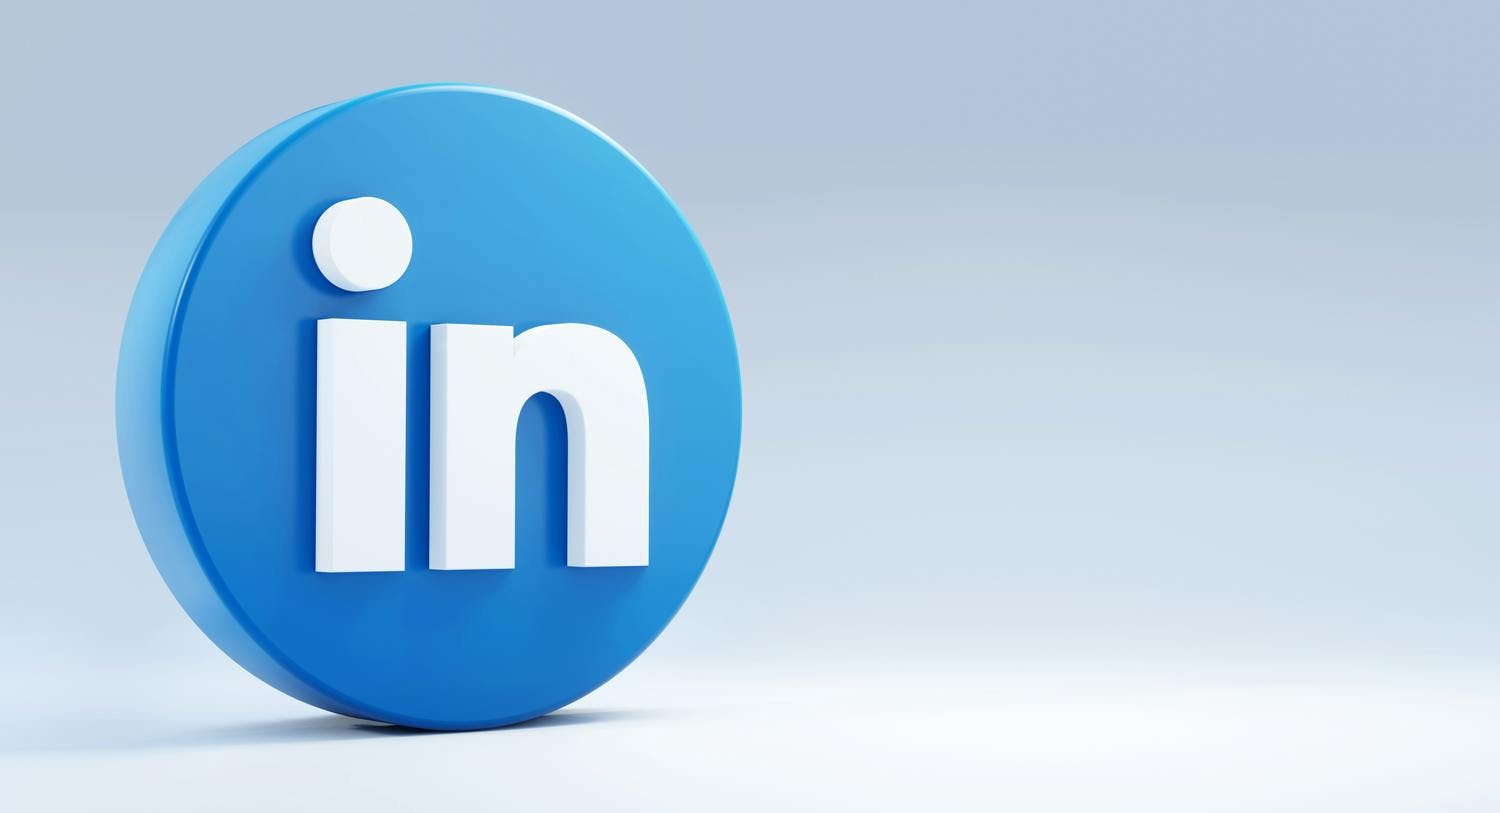 The LinkedIn logo against a blue-grey background